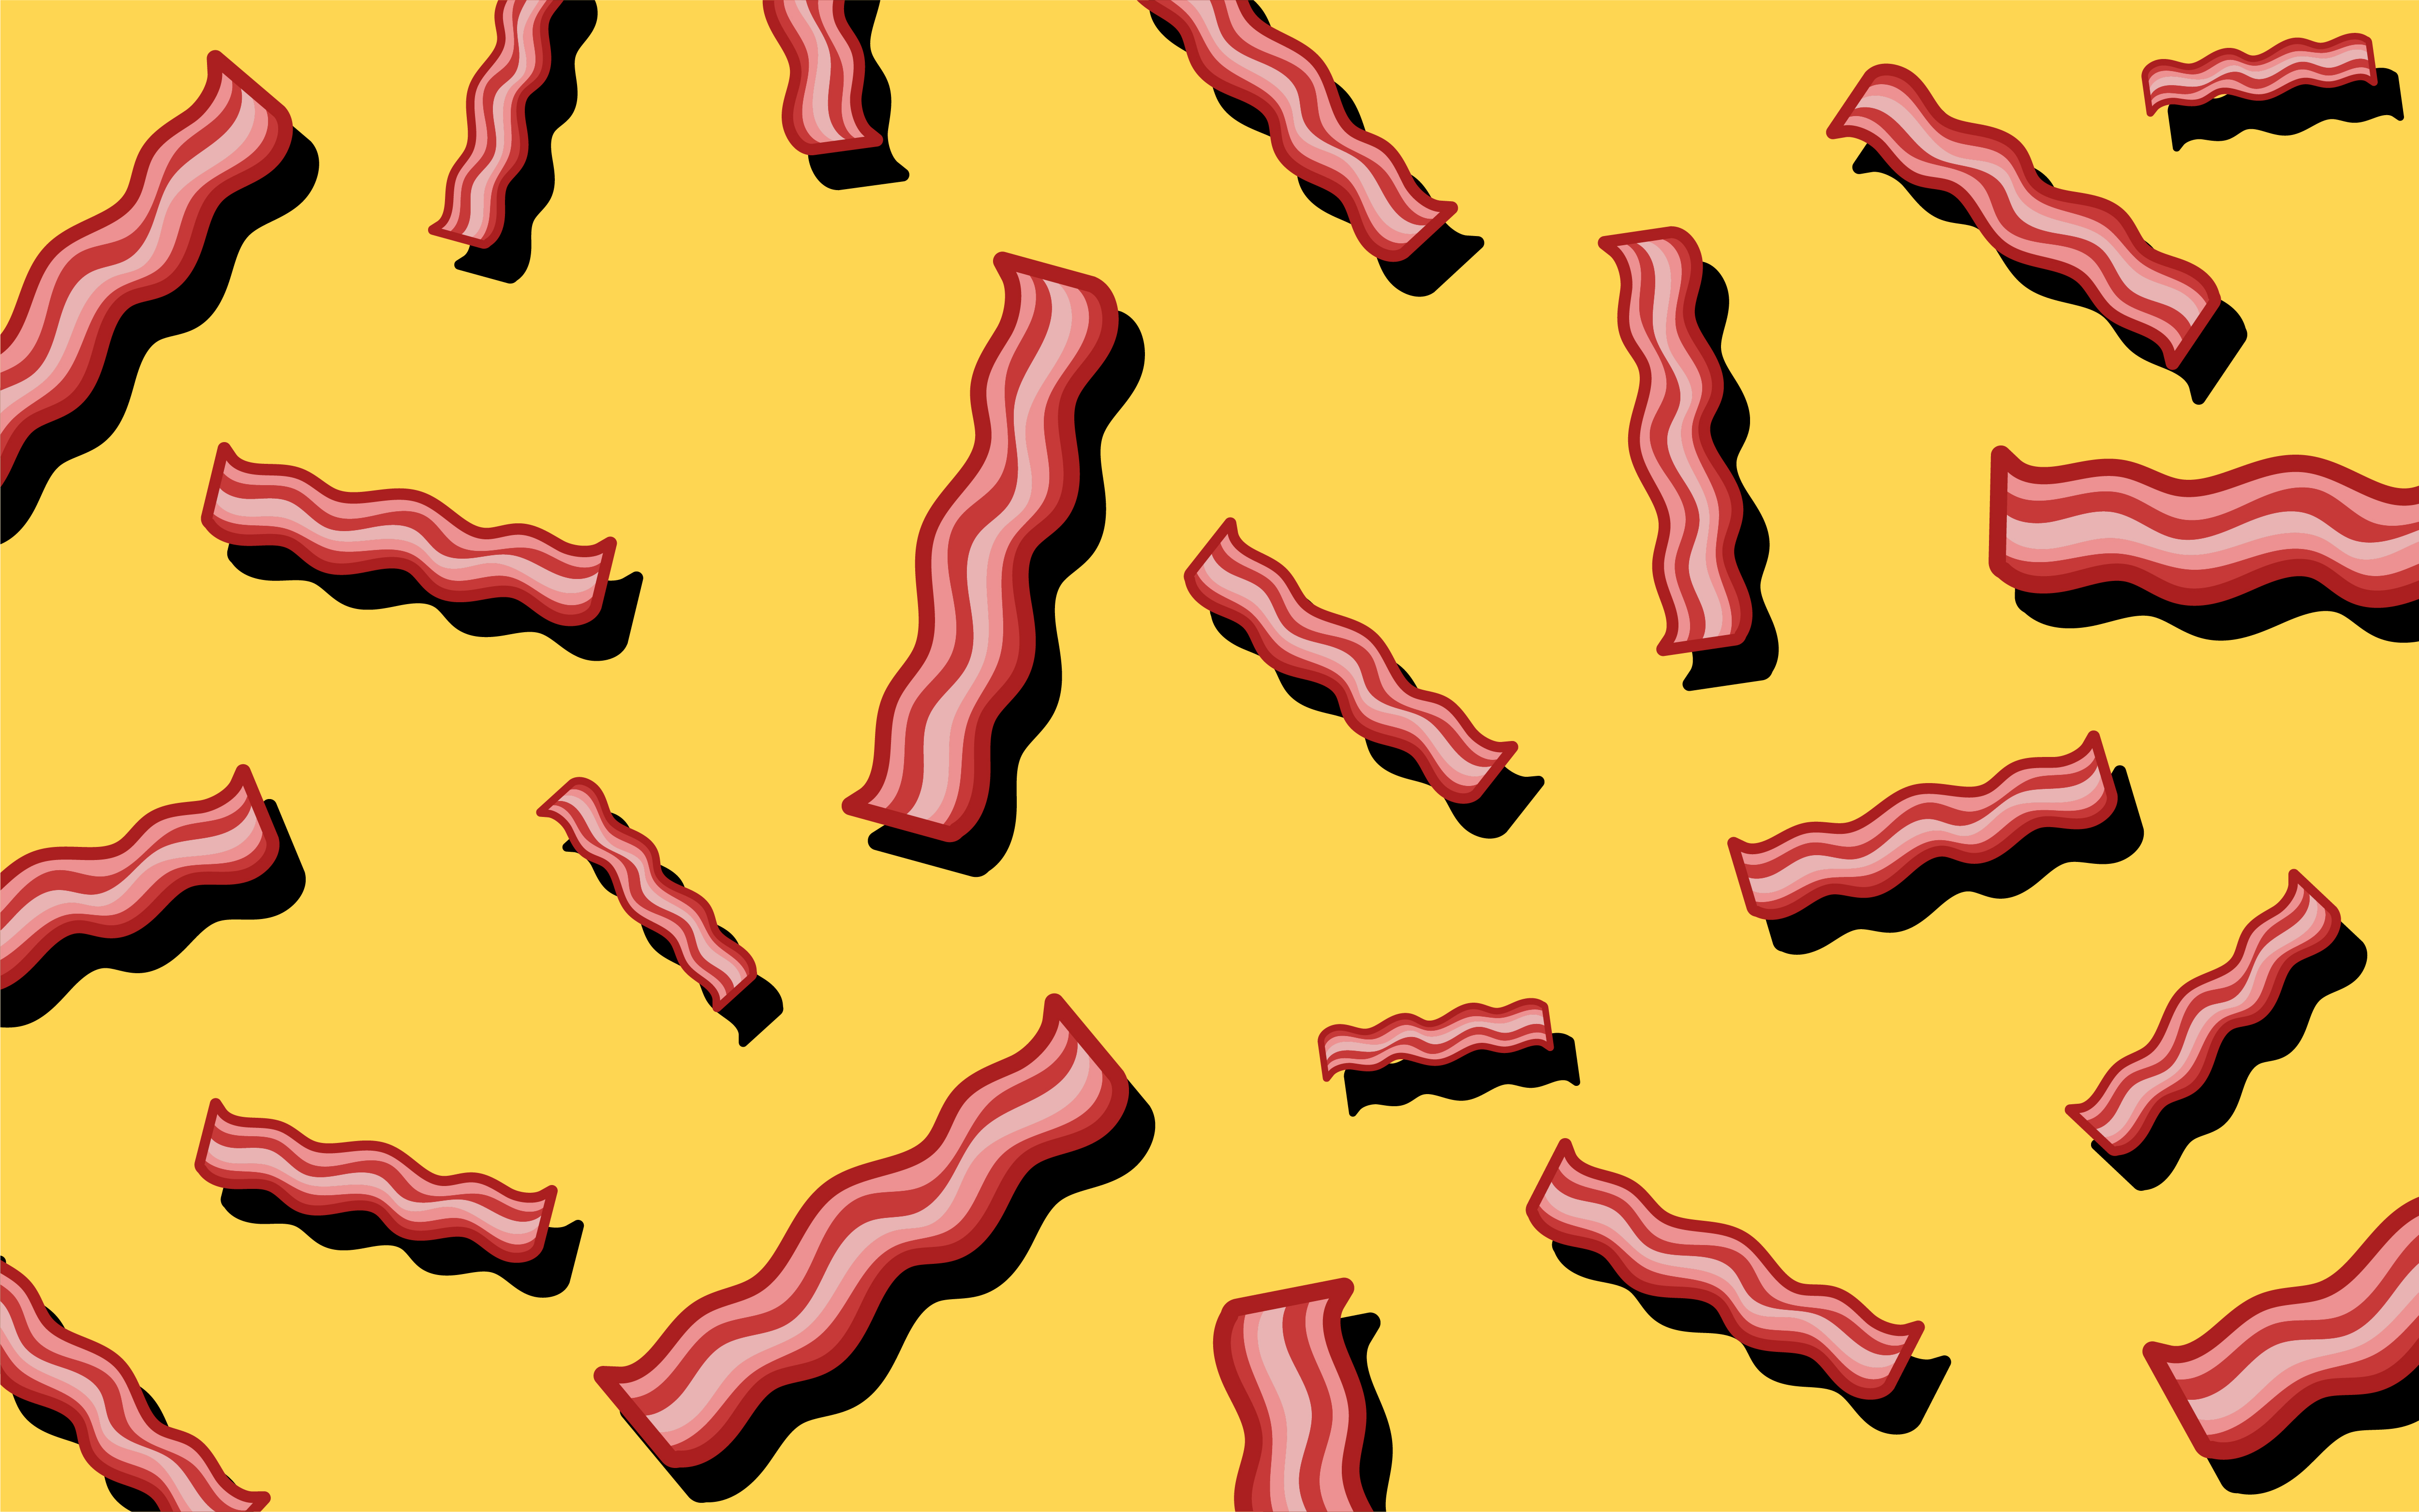 Bacon pattern food wallpaper illustration - Download Free Vectors